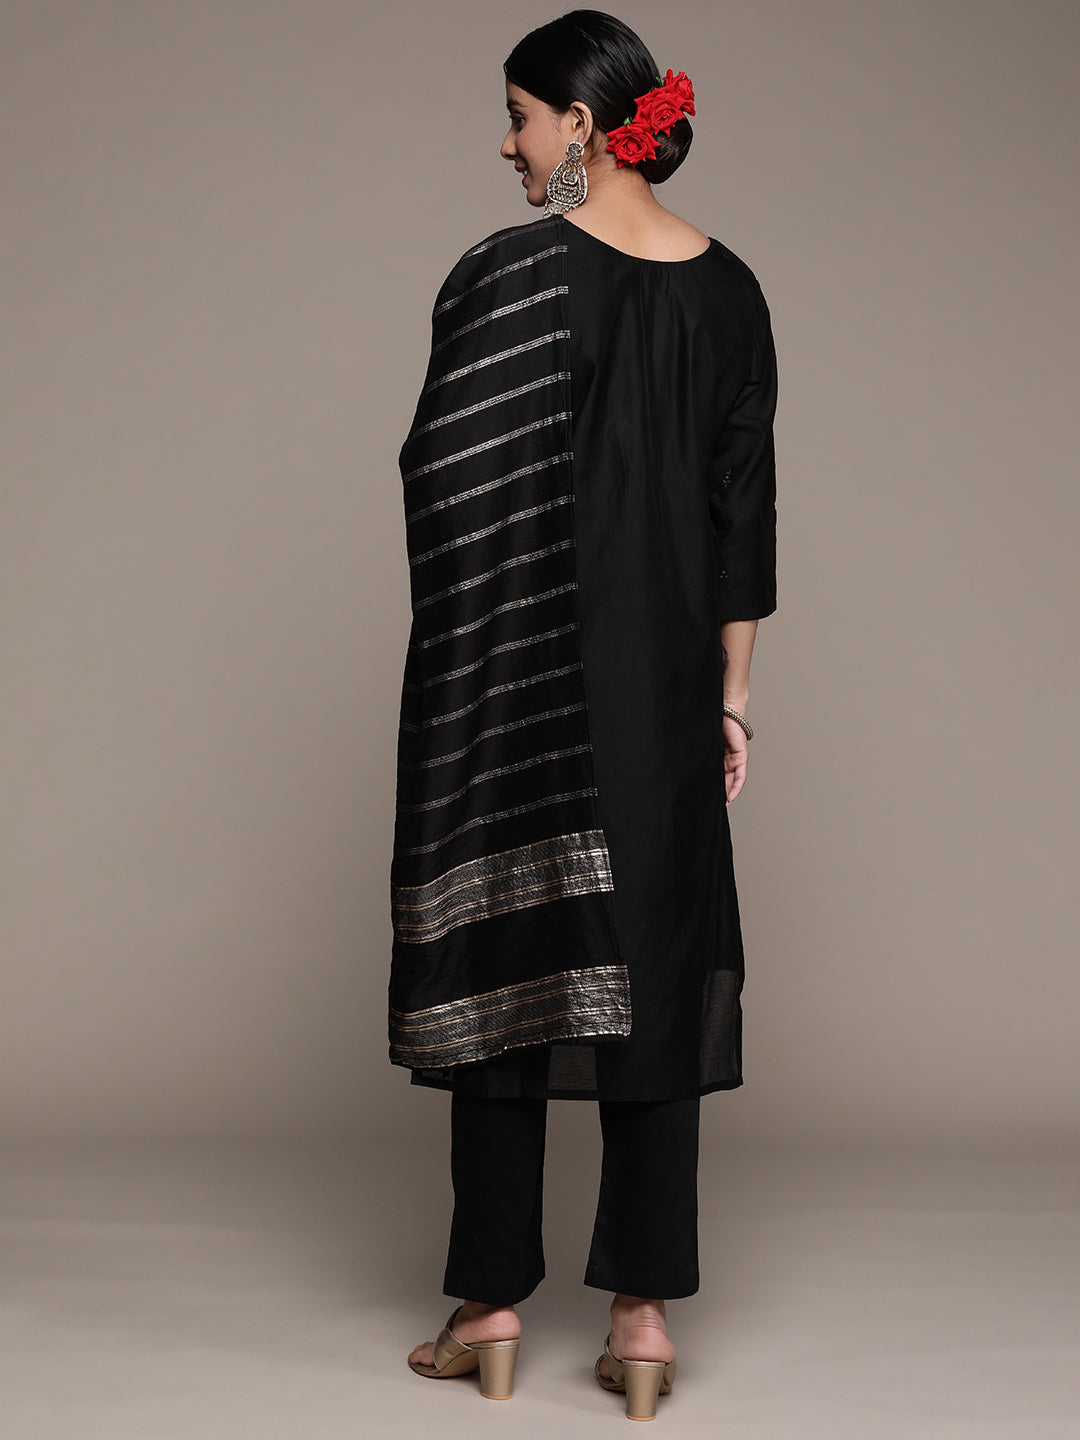 Ishin Women's Black Sequinned Embellished A-Line Kurta Trouser Dupatta Set